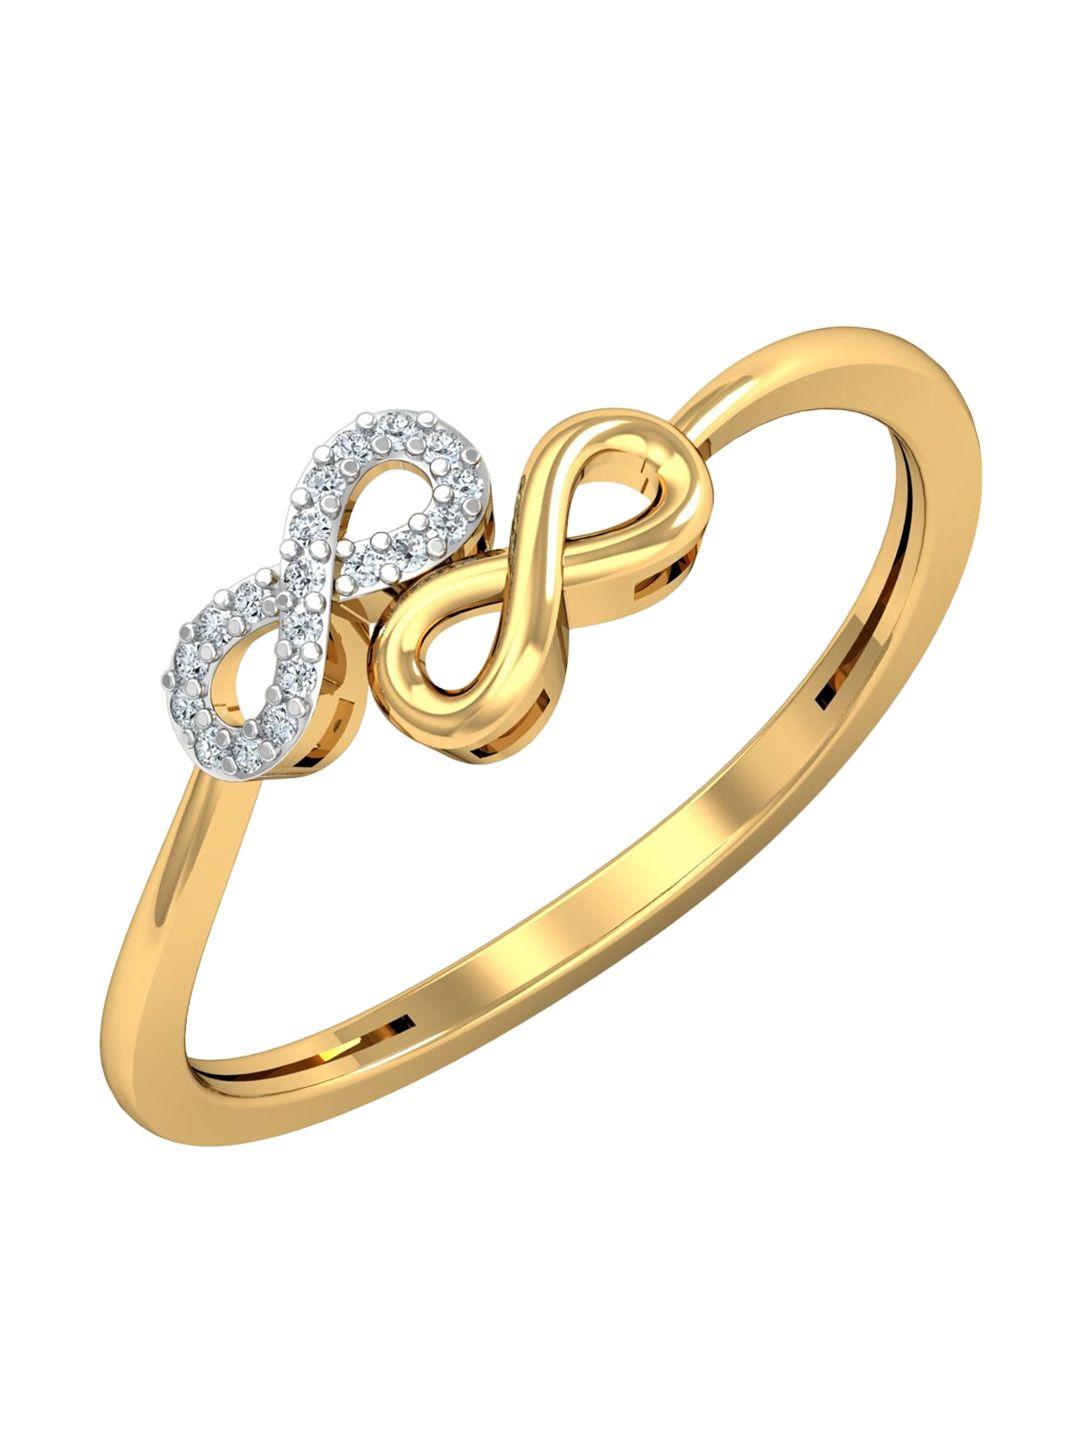 kuberbox 18kt gold diamond studded ring-1.19gm